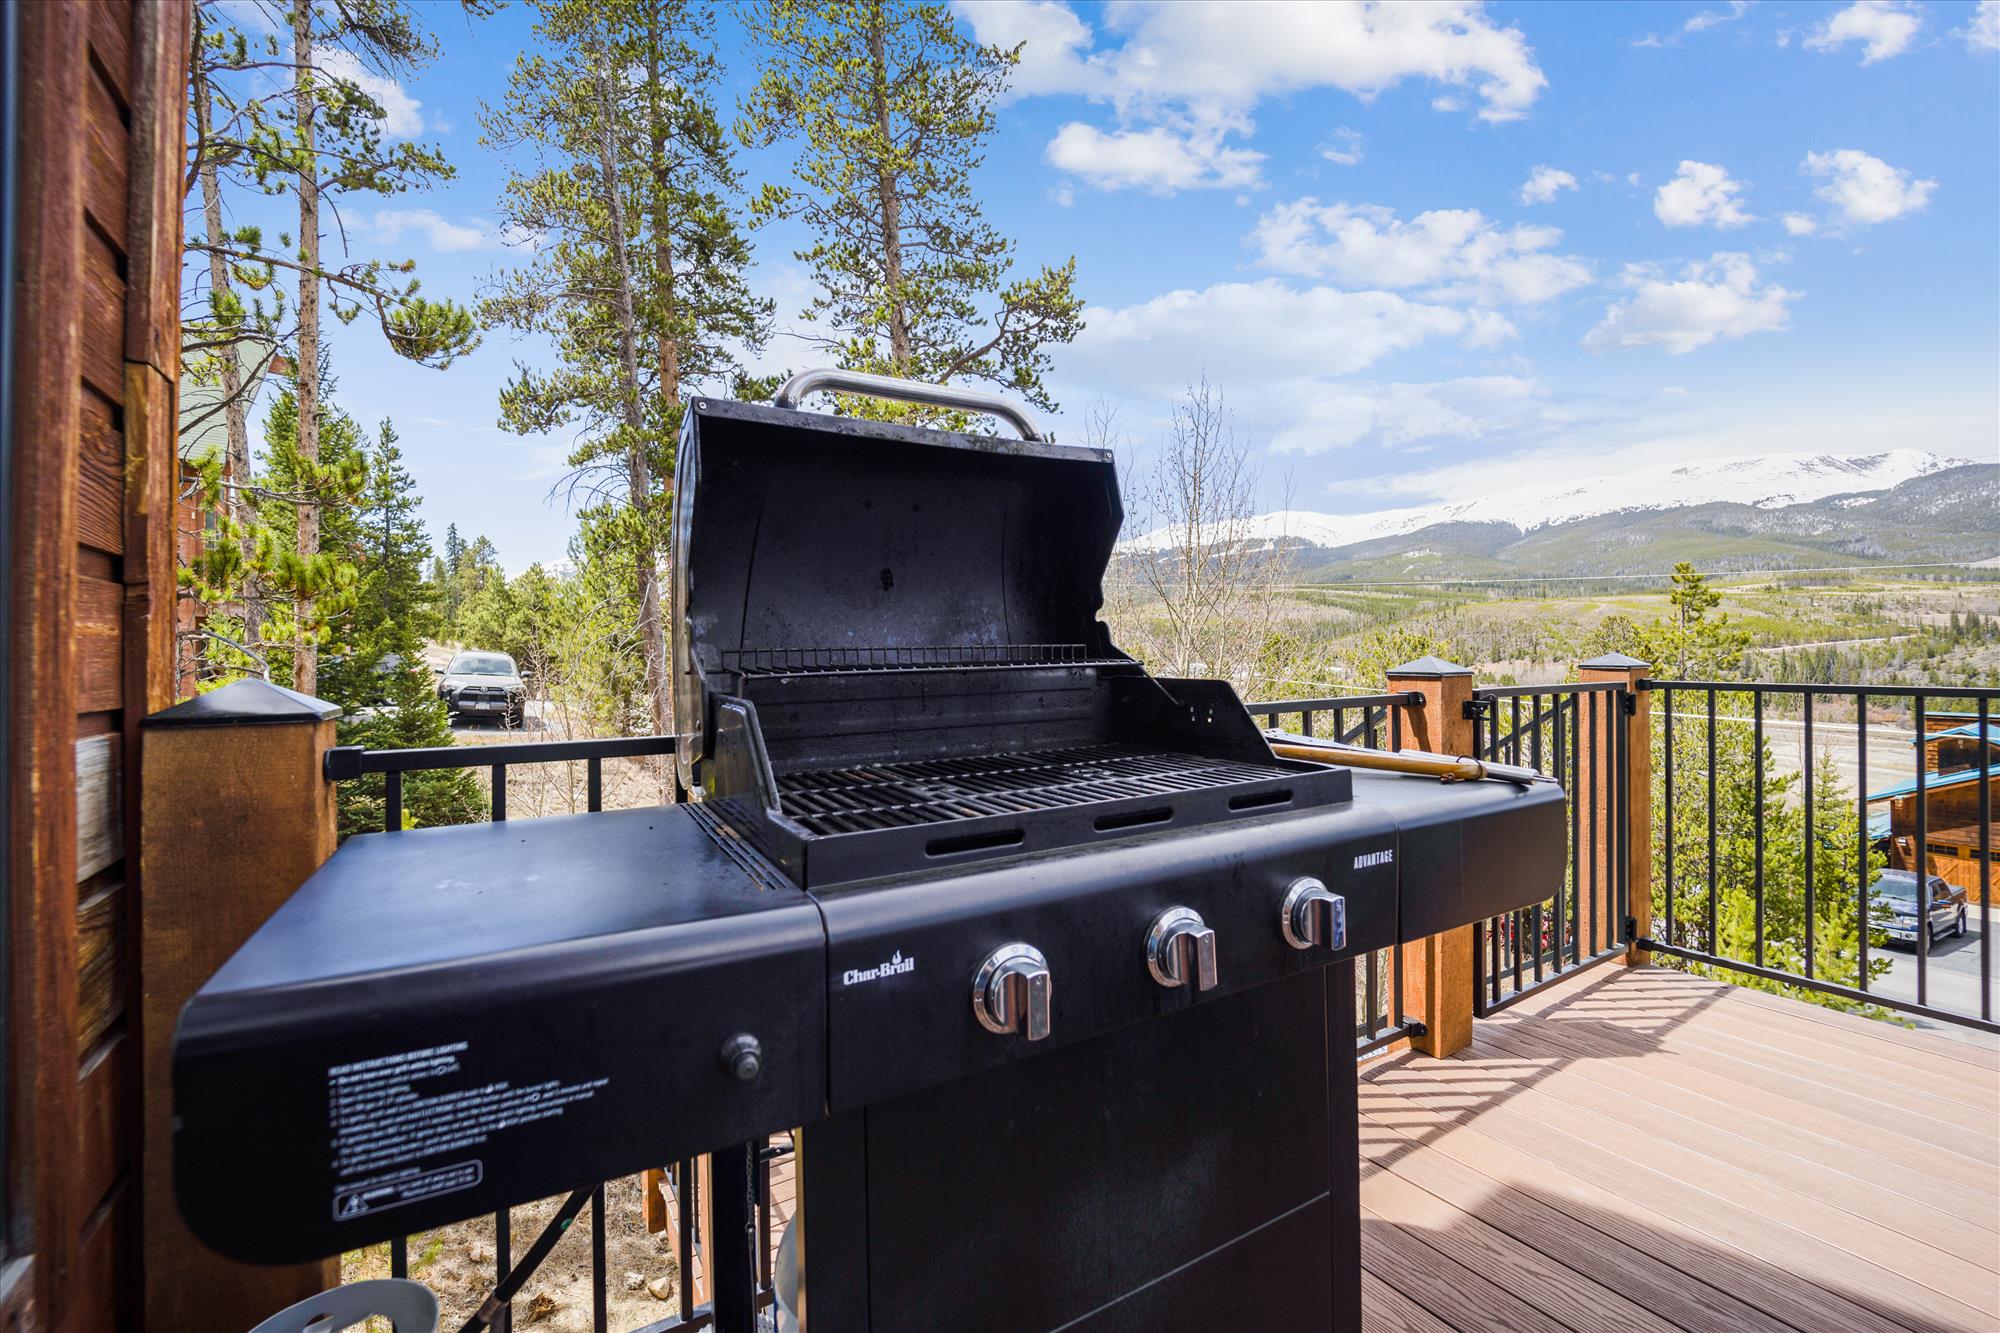 Propane grill - Powder Moose Villa - Breckenridge Vacation Rental